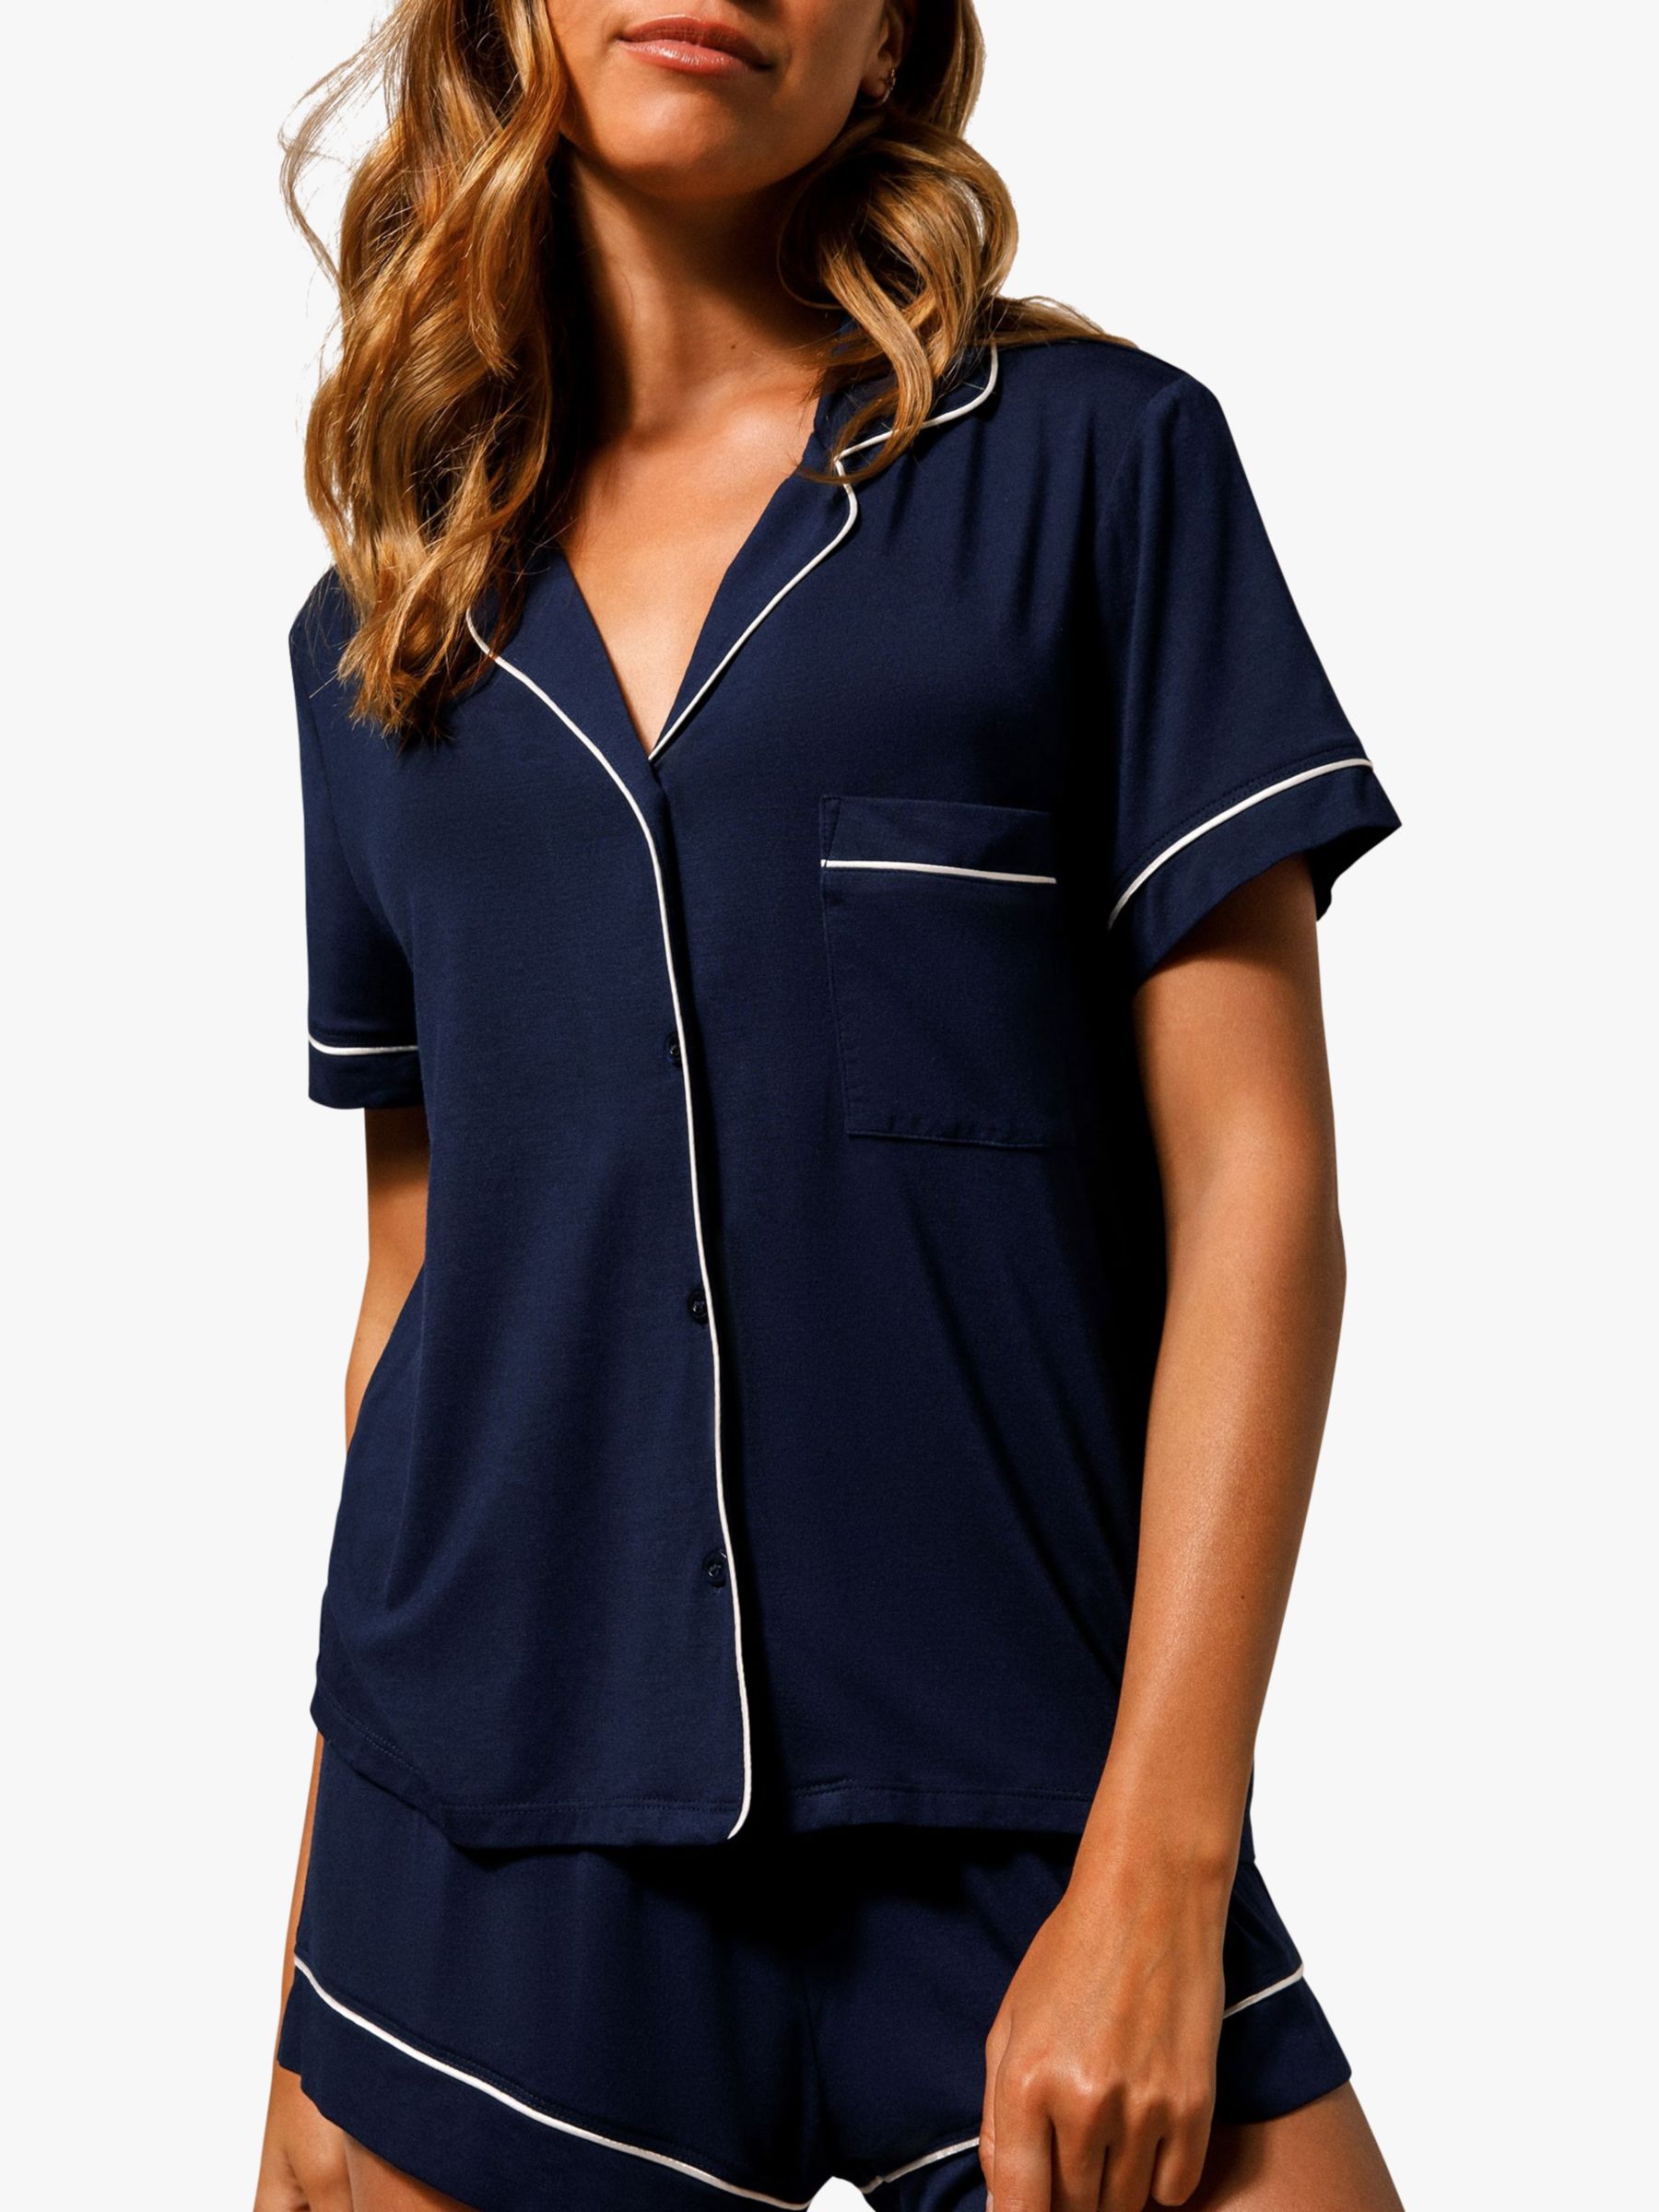 Chelsea Peers Modal Piped Shorts Pyjama Set, Navy at John Lewis & Partners